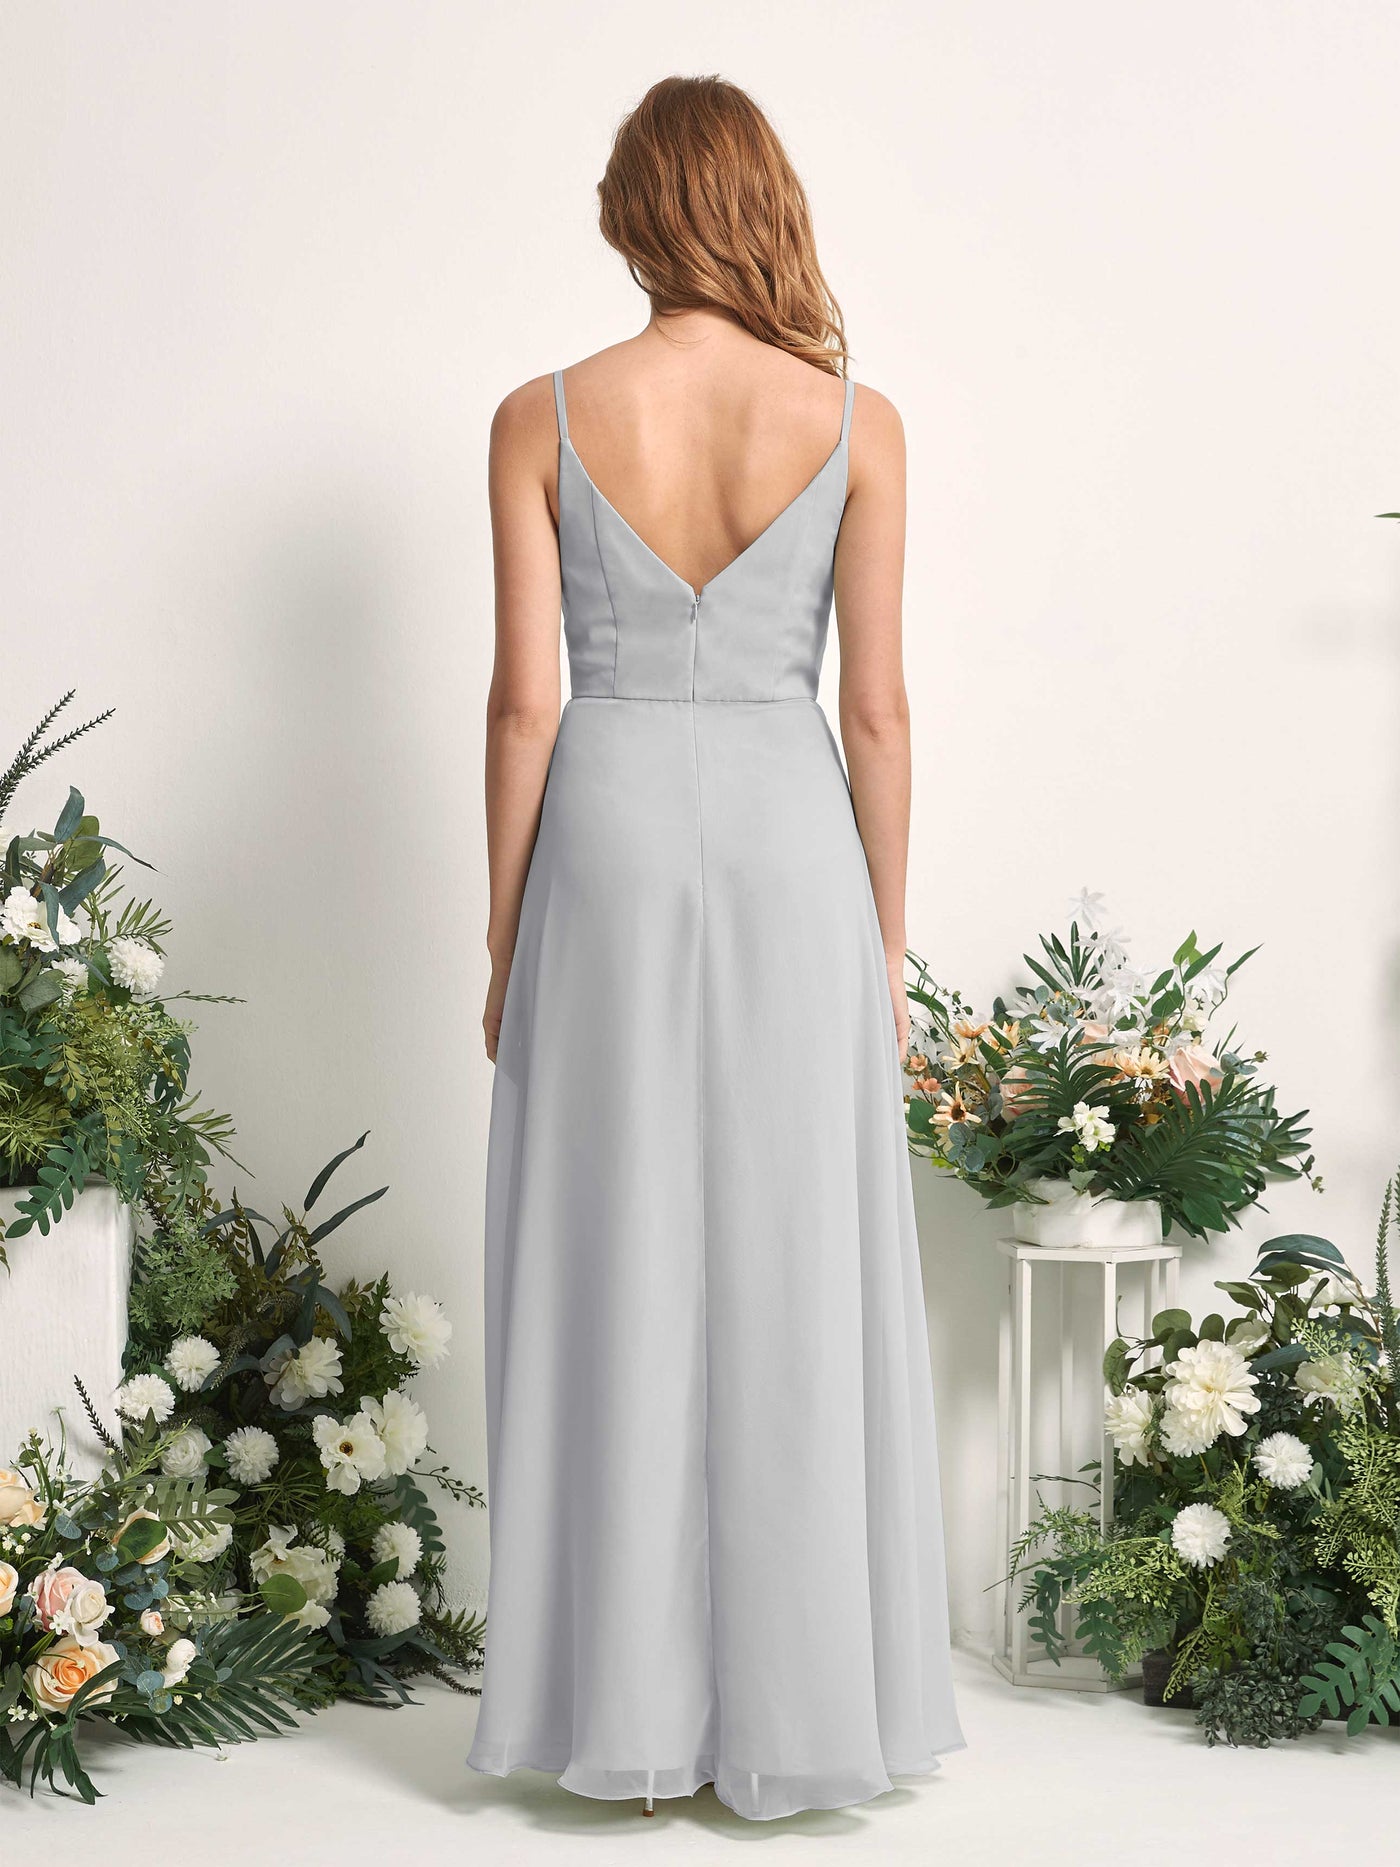 Bridesmaid Dress A-line Chiffon Spaghetti-straps Full Length Sleeveless Wedding Party Dress - Silver (81227227)#color_silver